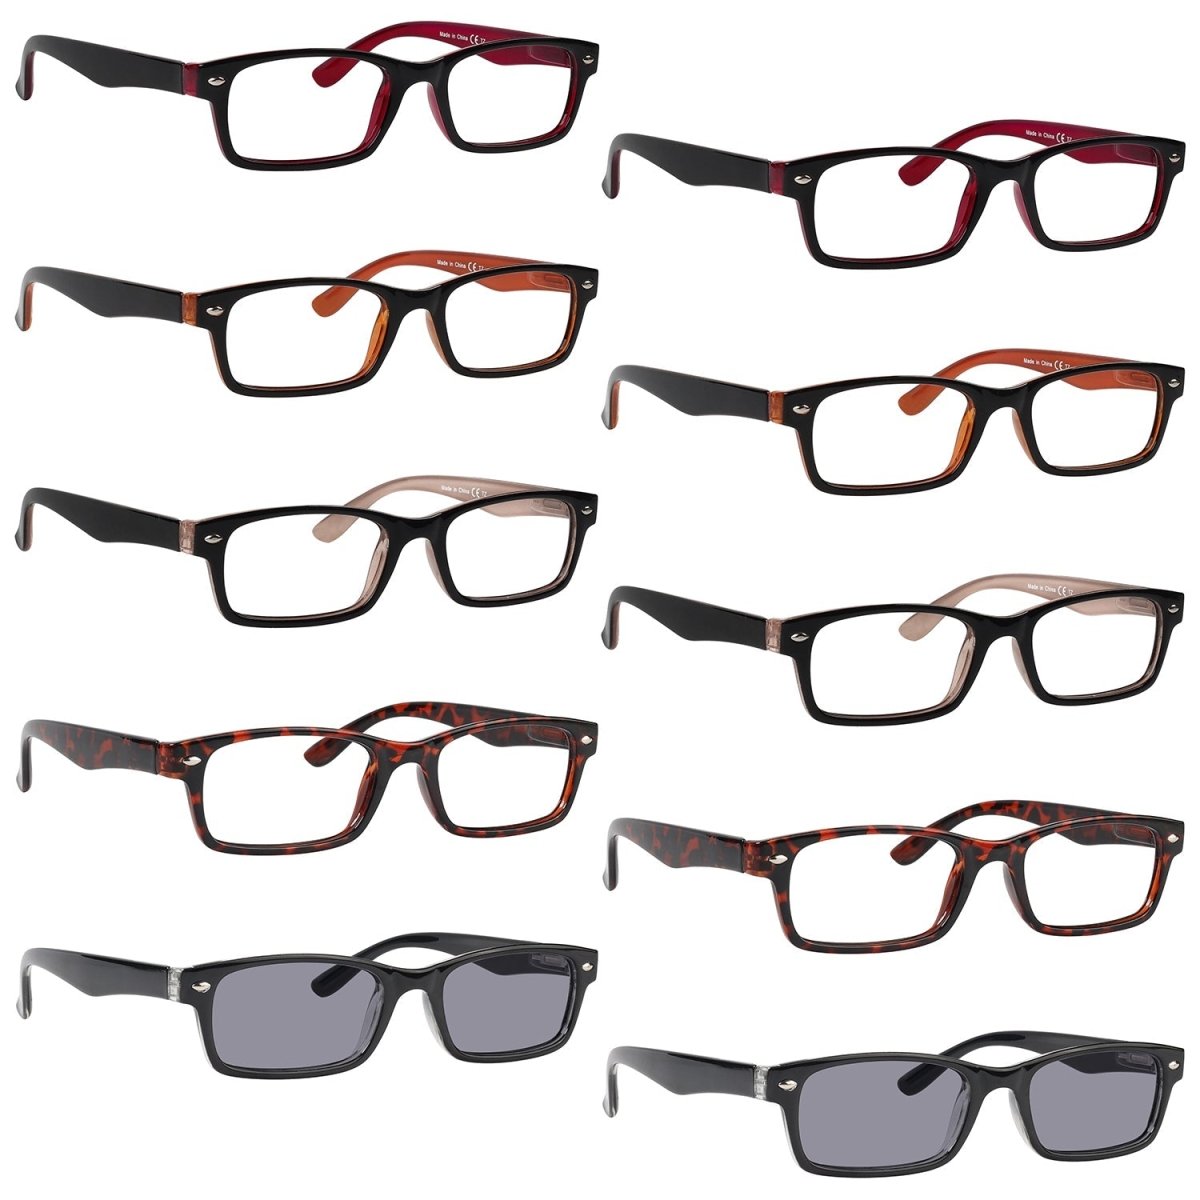 10 Pack Spring Hinges Readers Include Reading Sunglasses R055eyekeeper.com